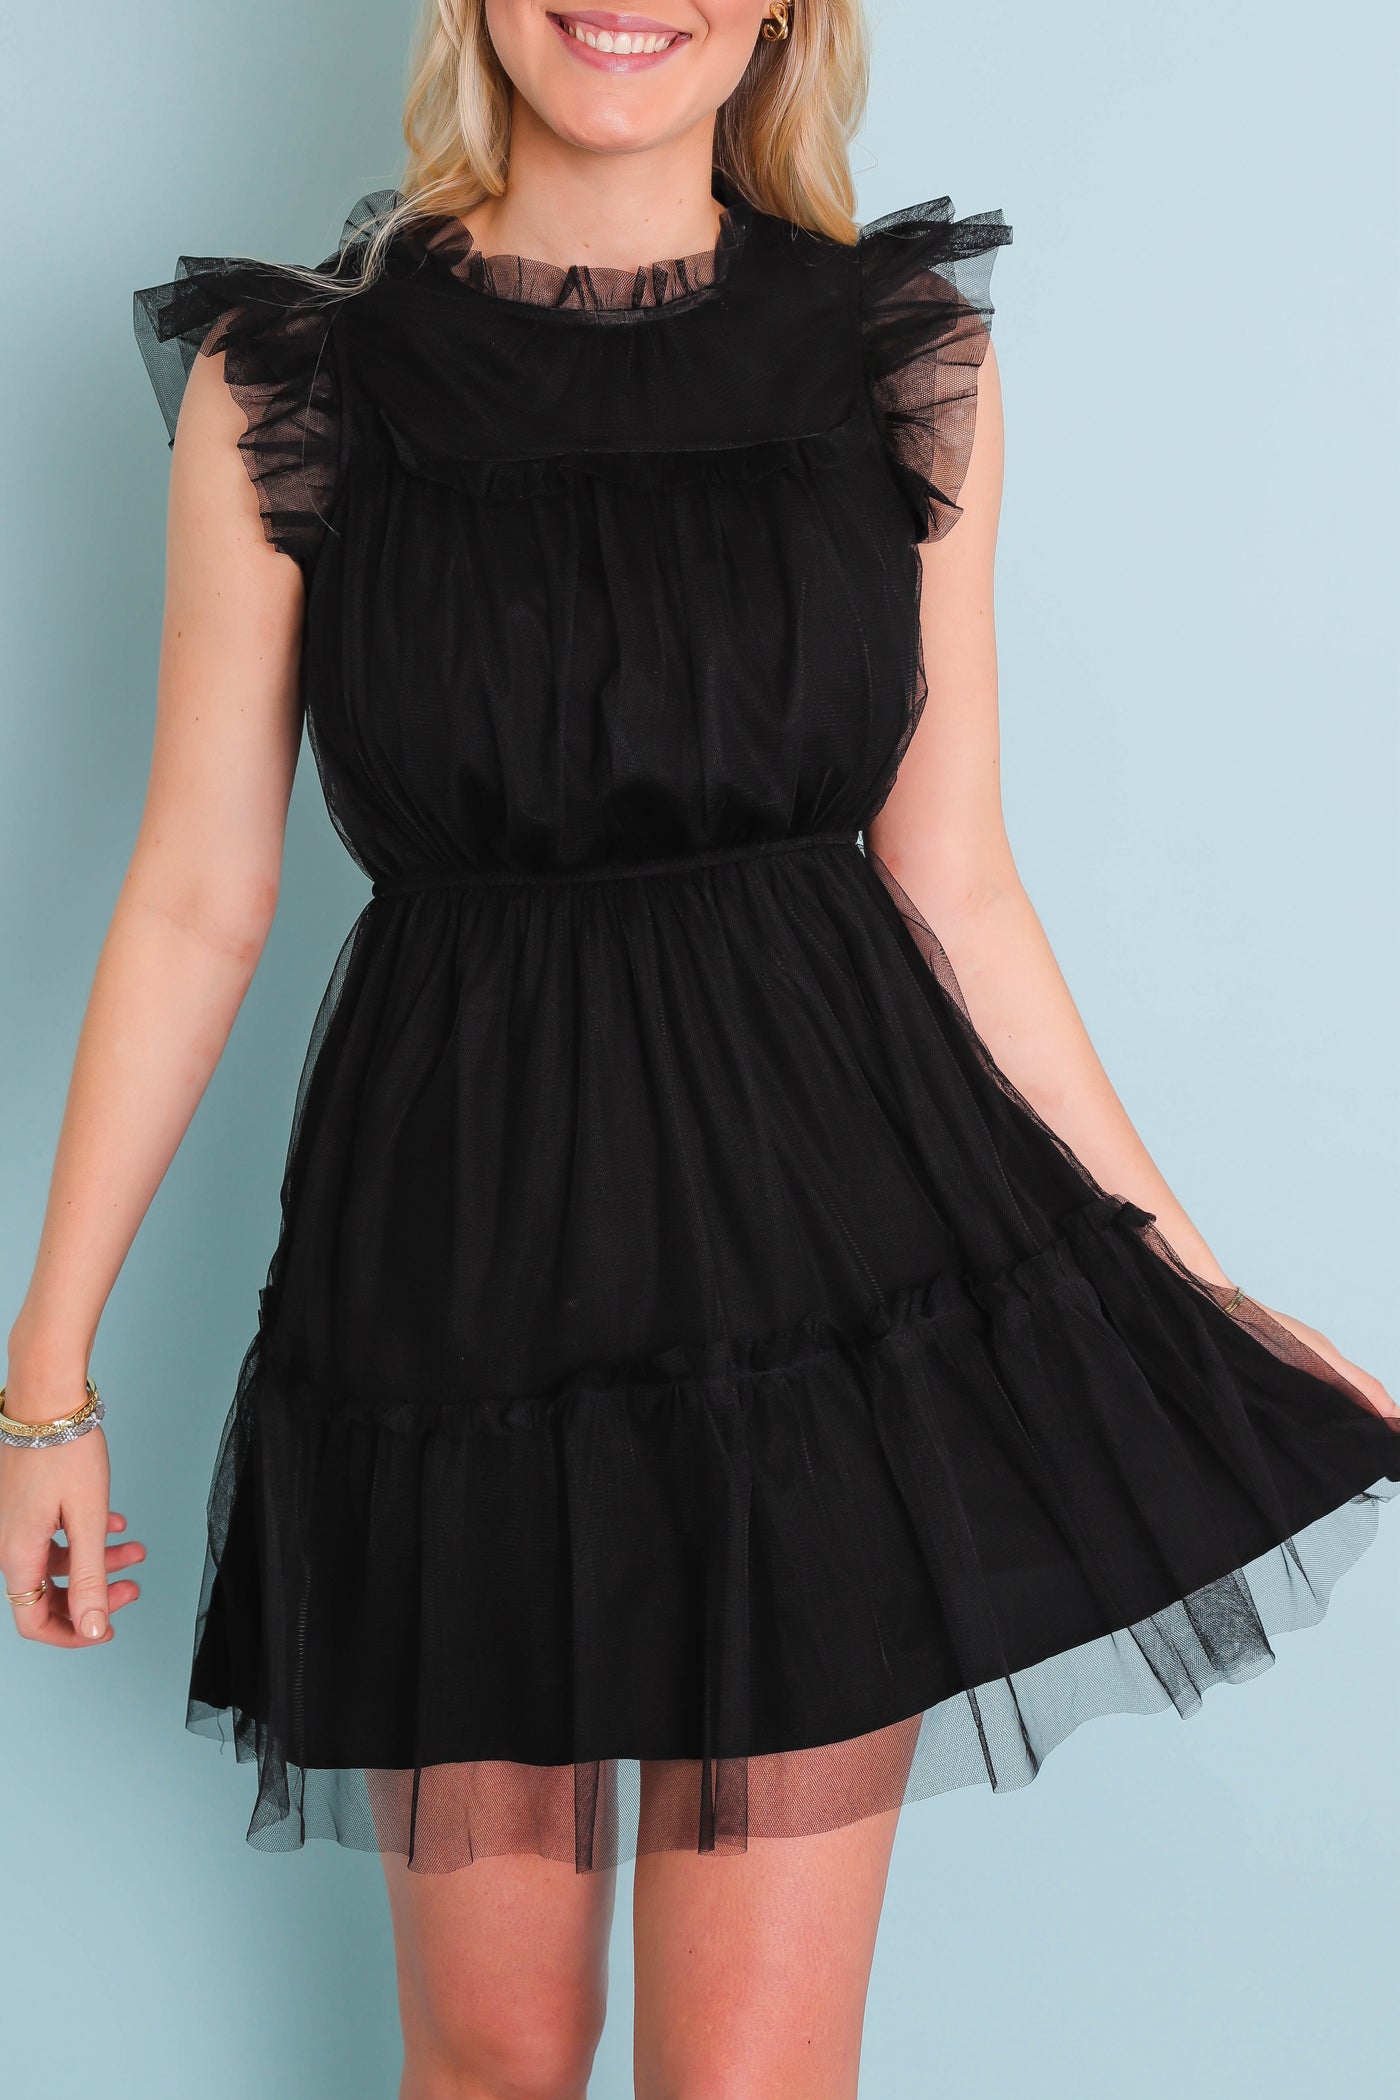 Fun Tulle Dress- Black Tulle Dress- Preppy Women's Dresses- &Merci Dress